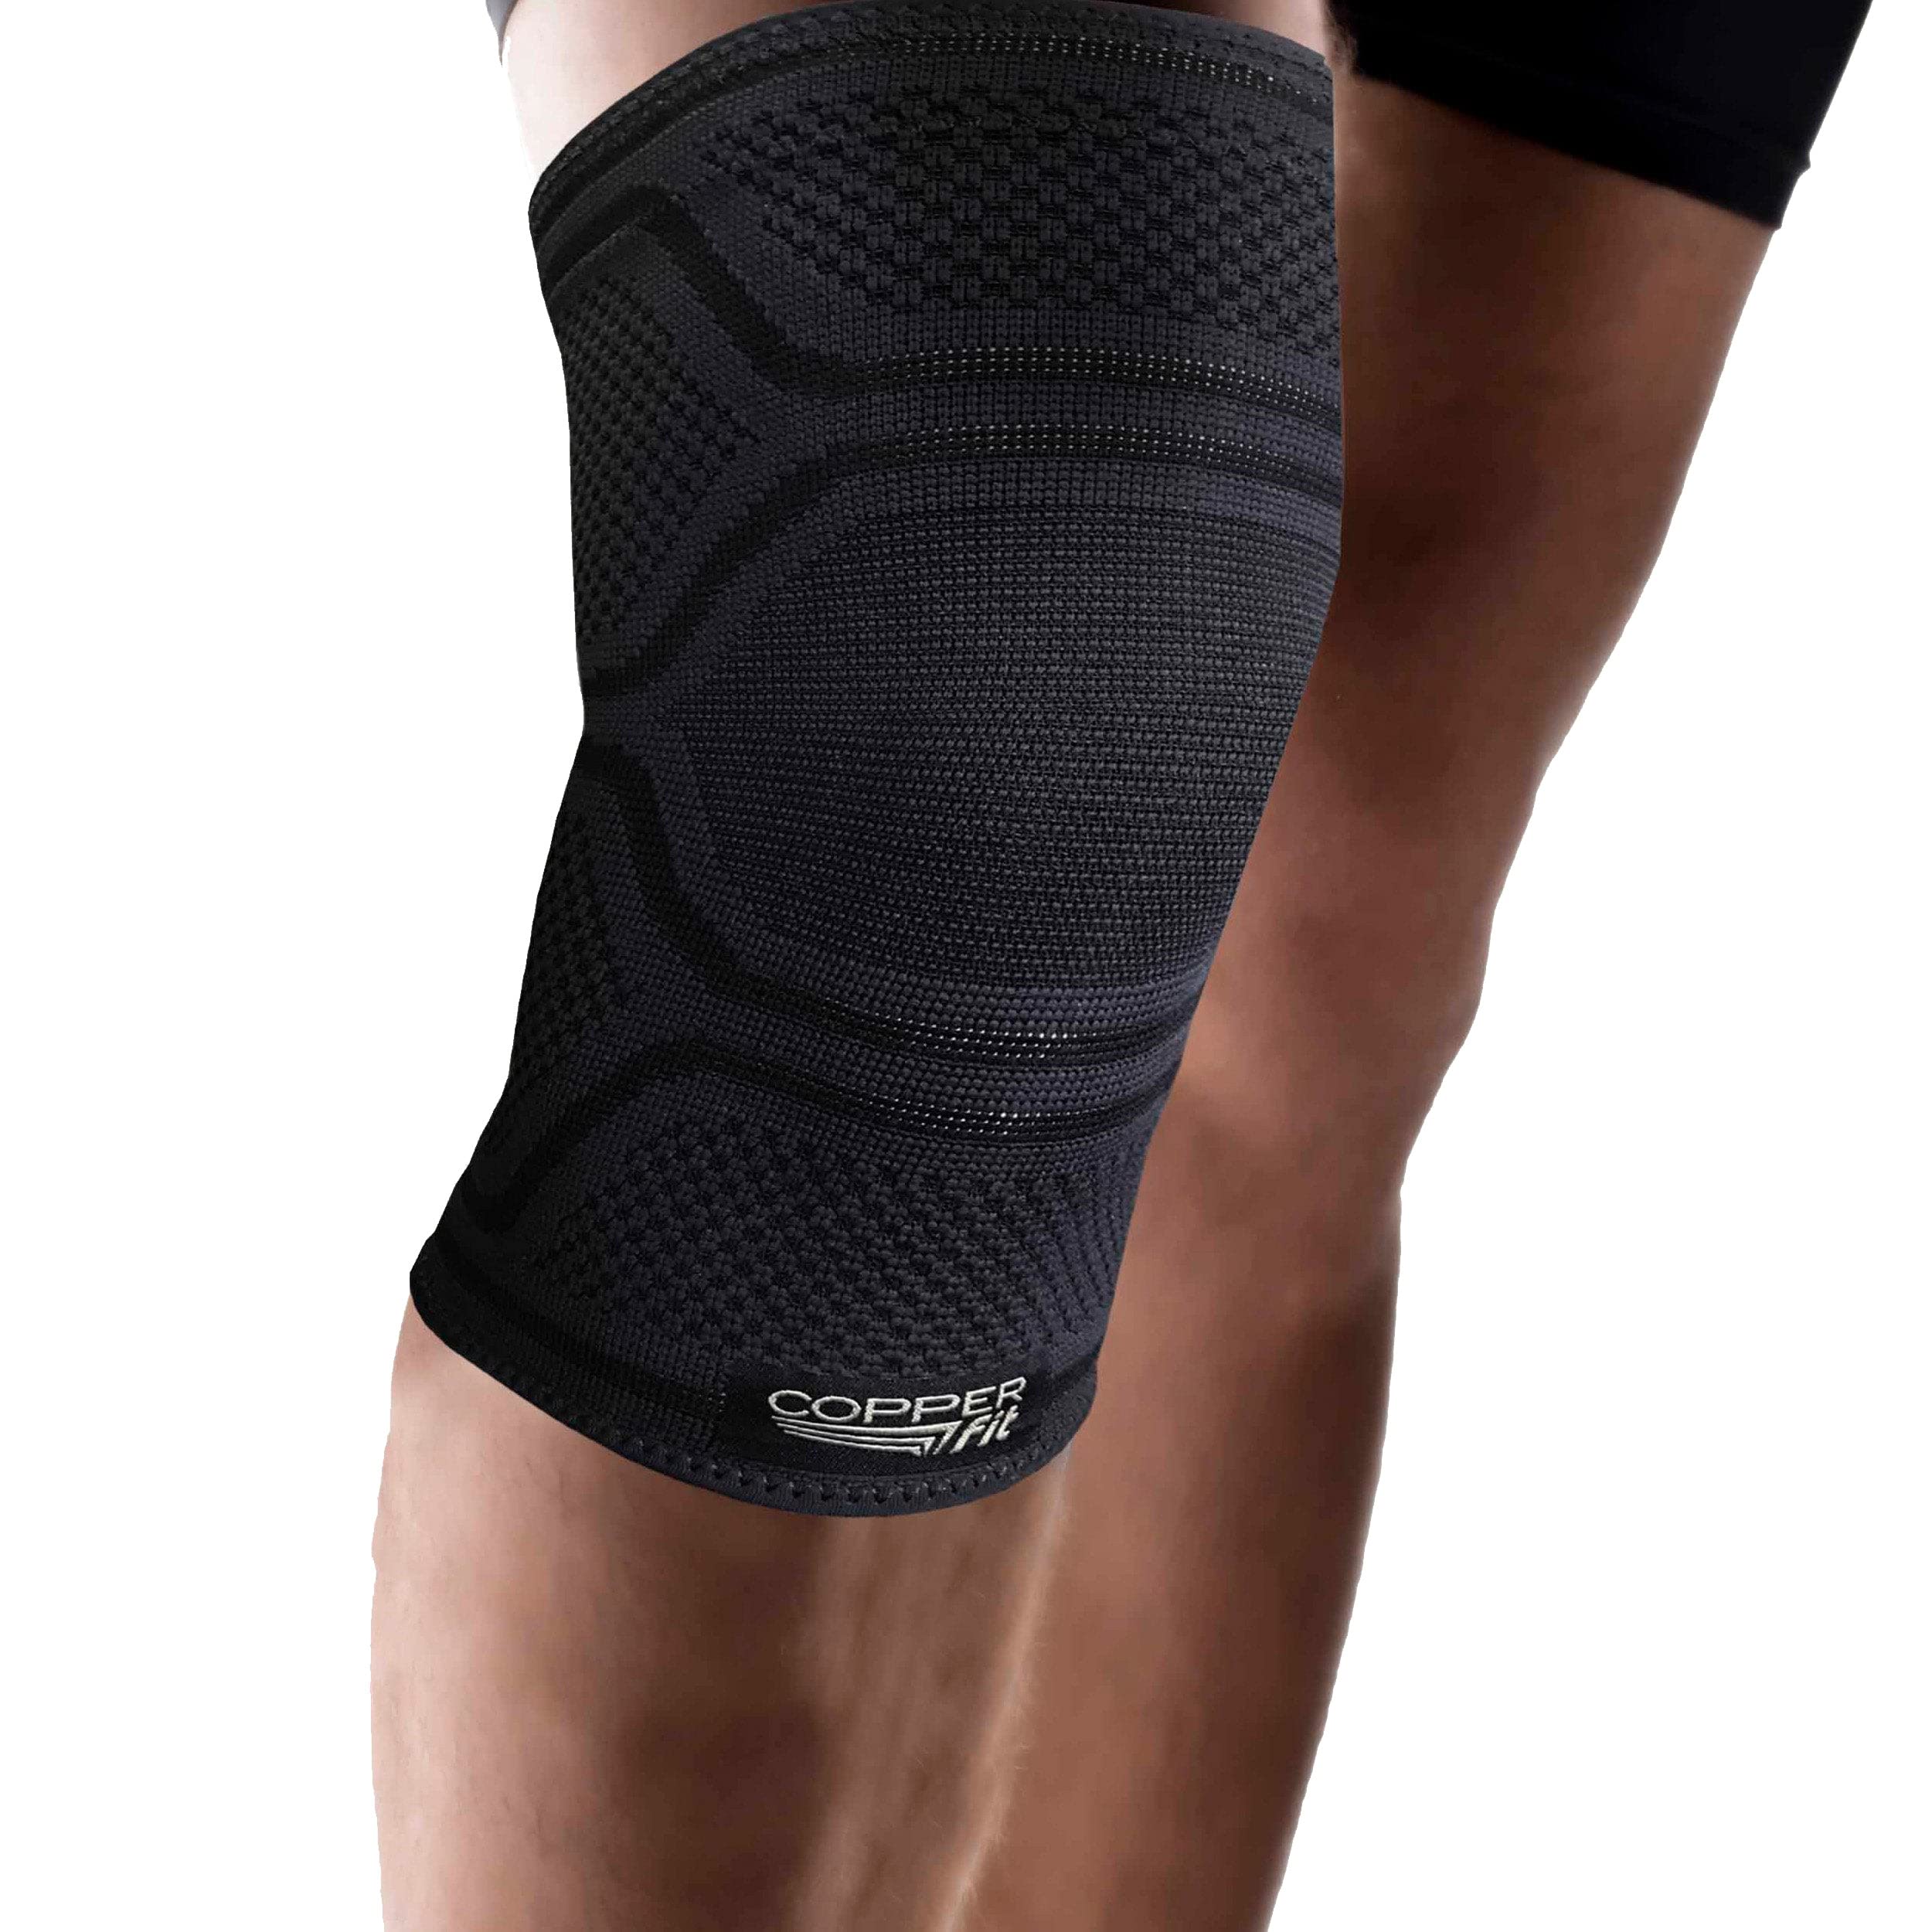 Copper Fit Elite Knee Compression Sleeve Knee Brace, Black | One Knee Sleeve Included  - Like New